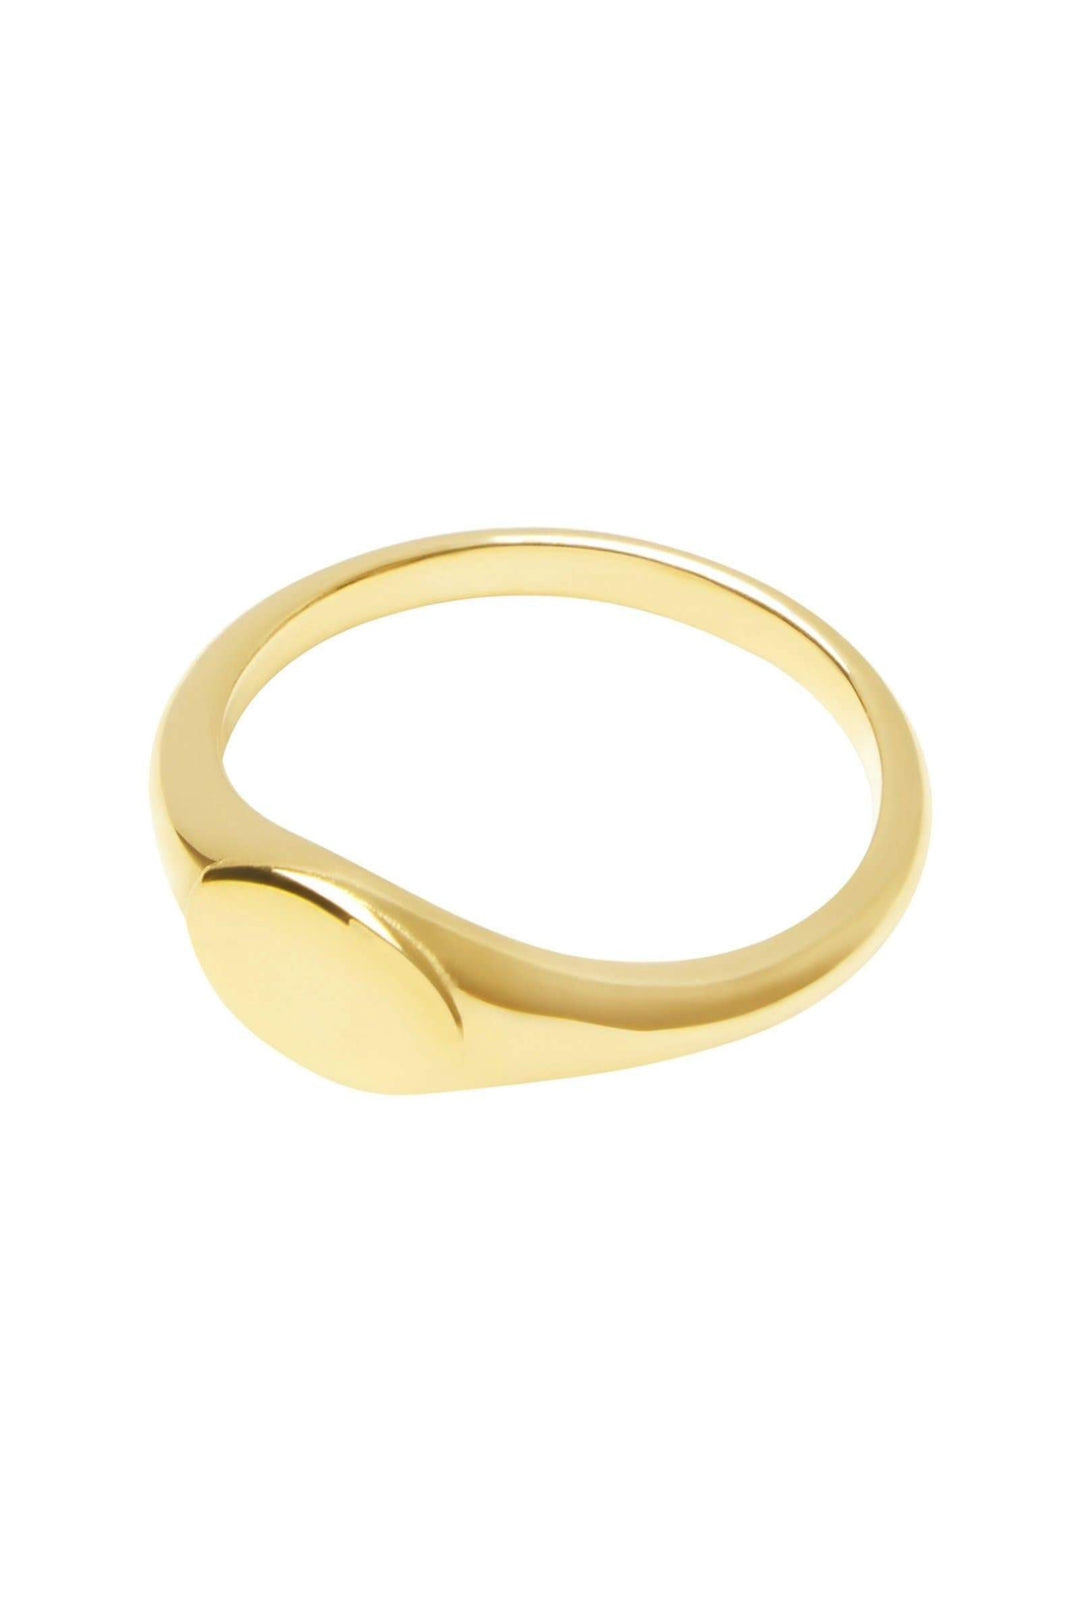 Radiance Ring- Gold